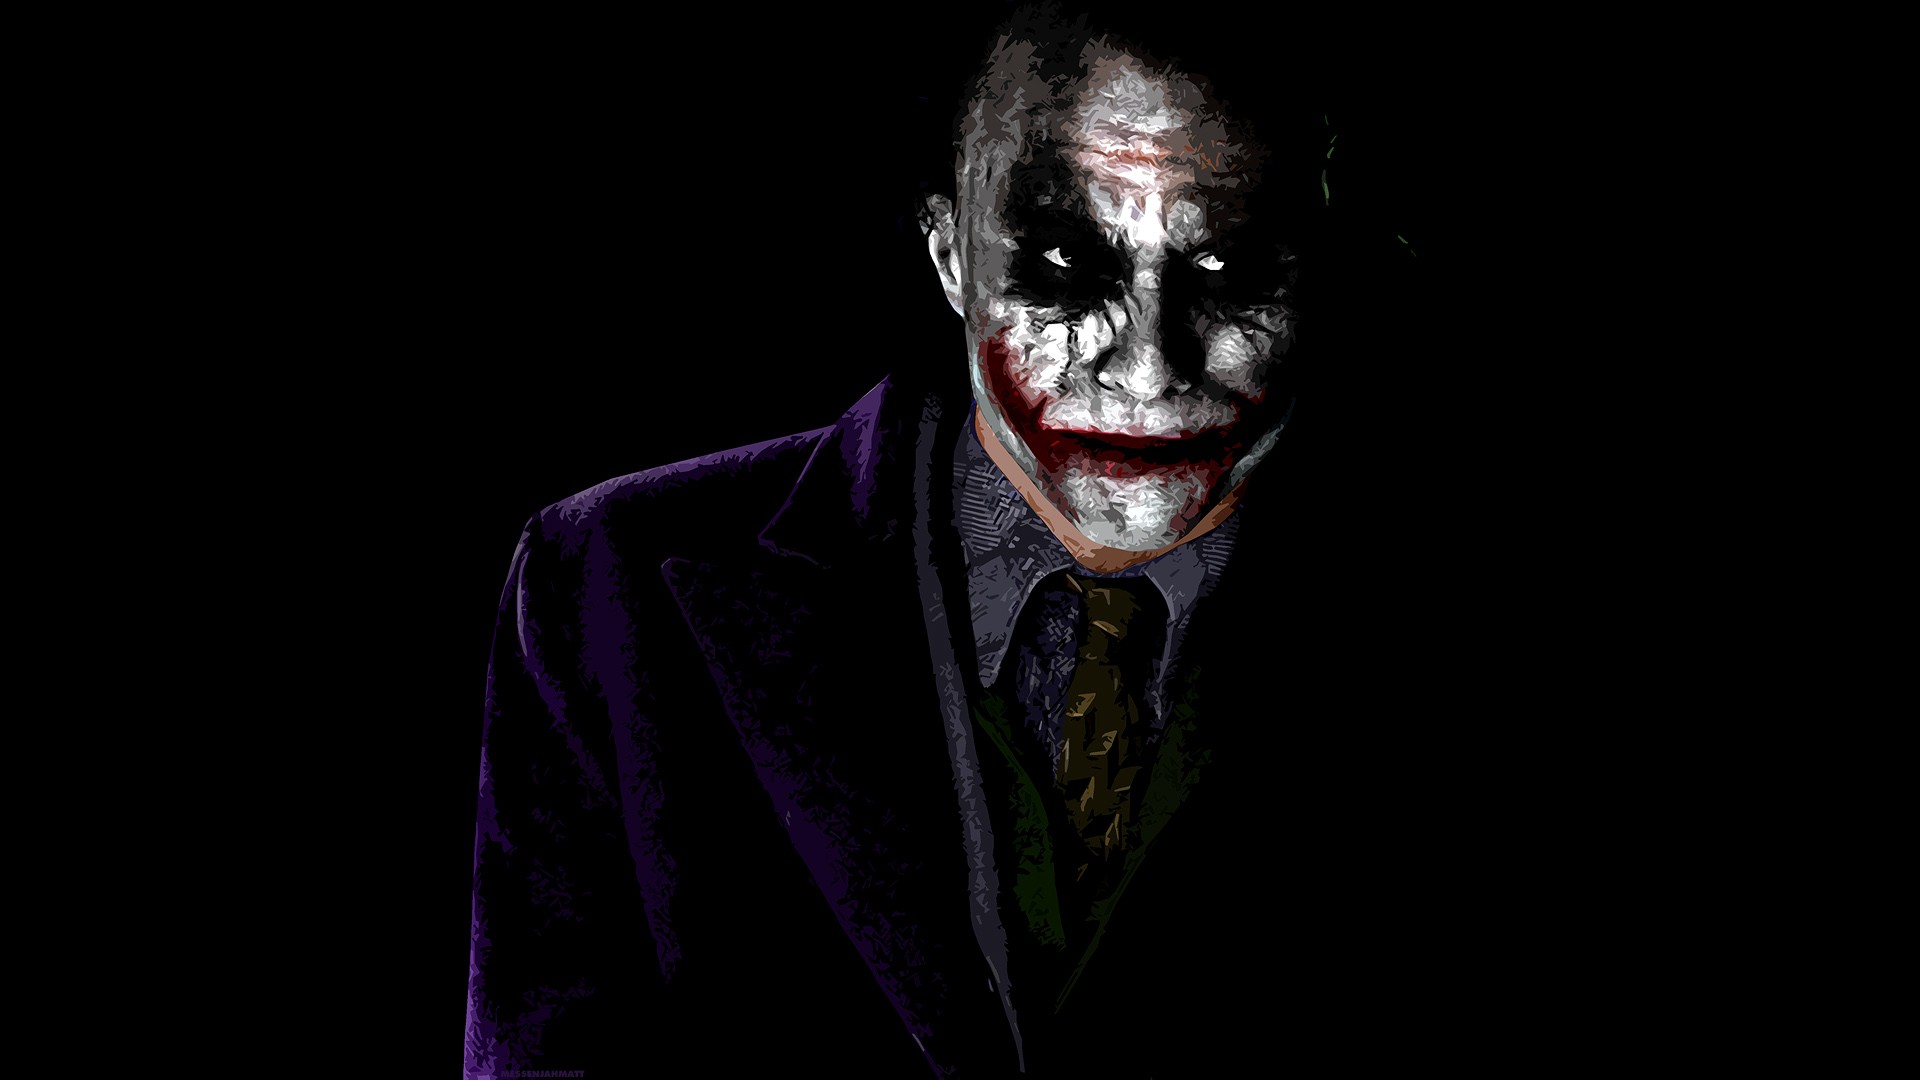 Creepy Joker 2020 Minimal Wallpapers